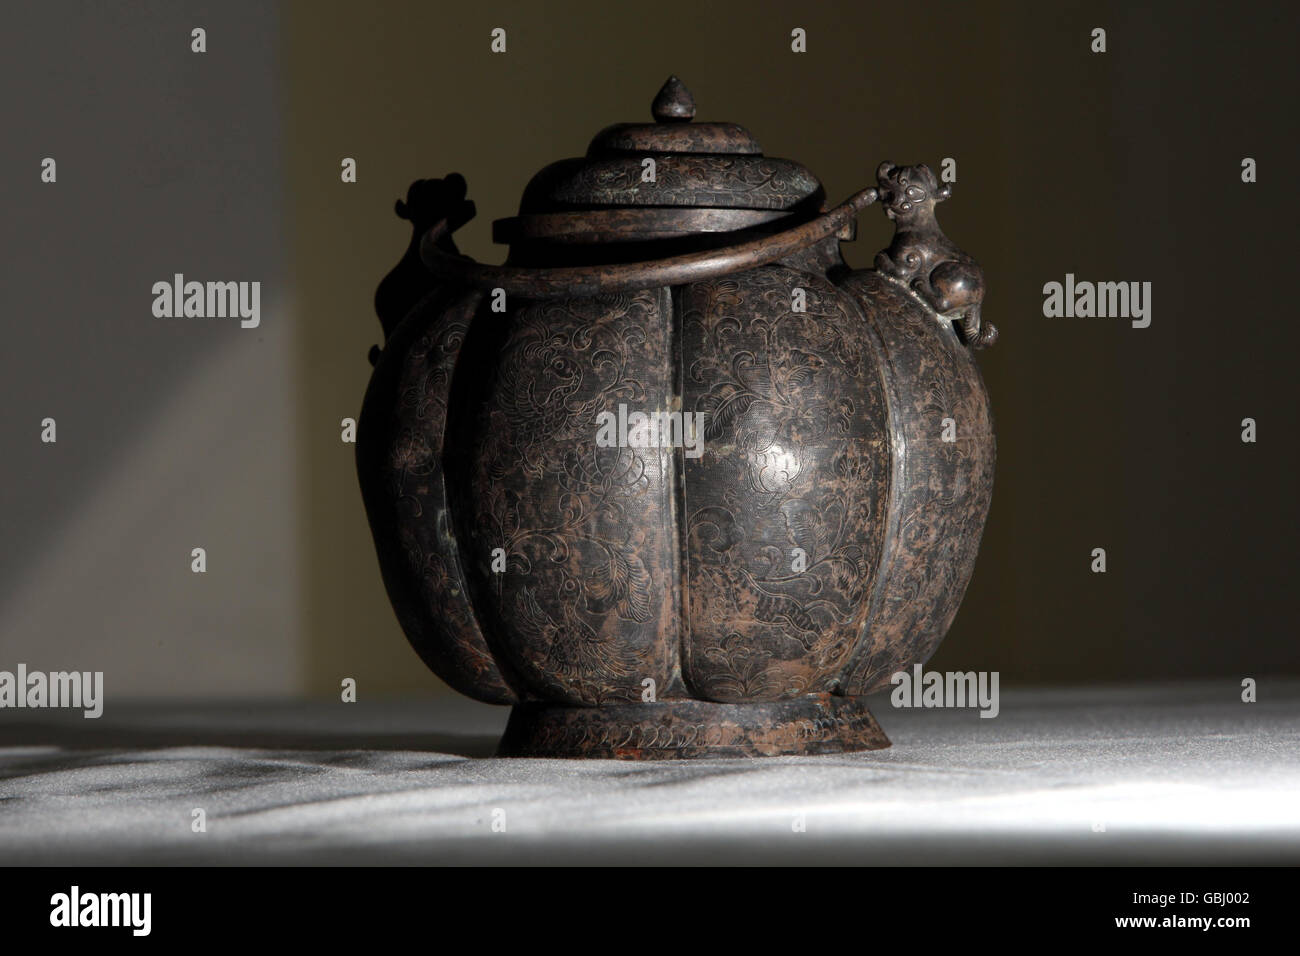 Tang vase found amongst bric-a-brac Stock Photo